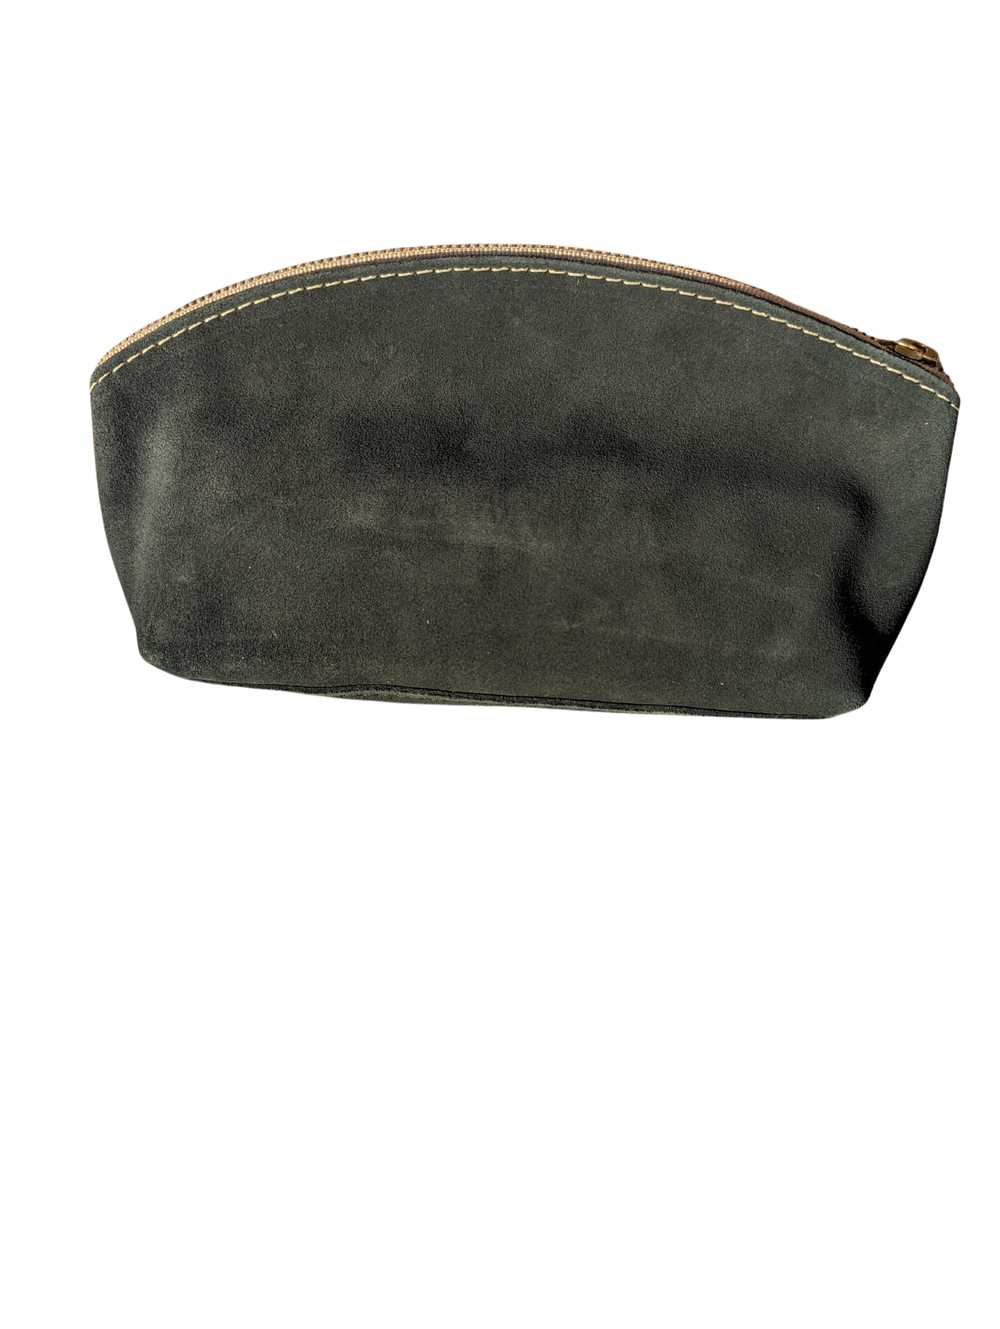 Portland Leather Eclipse Makeup Bag - image 1